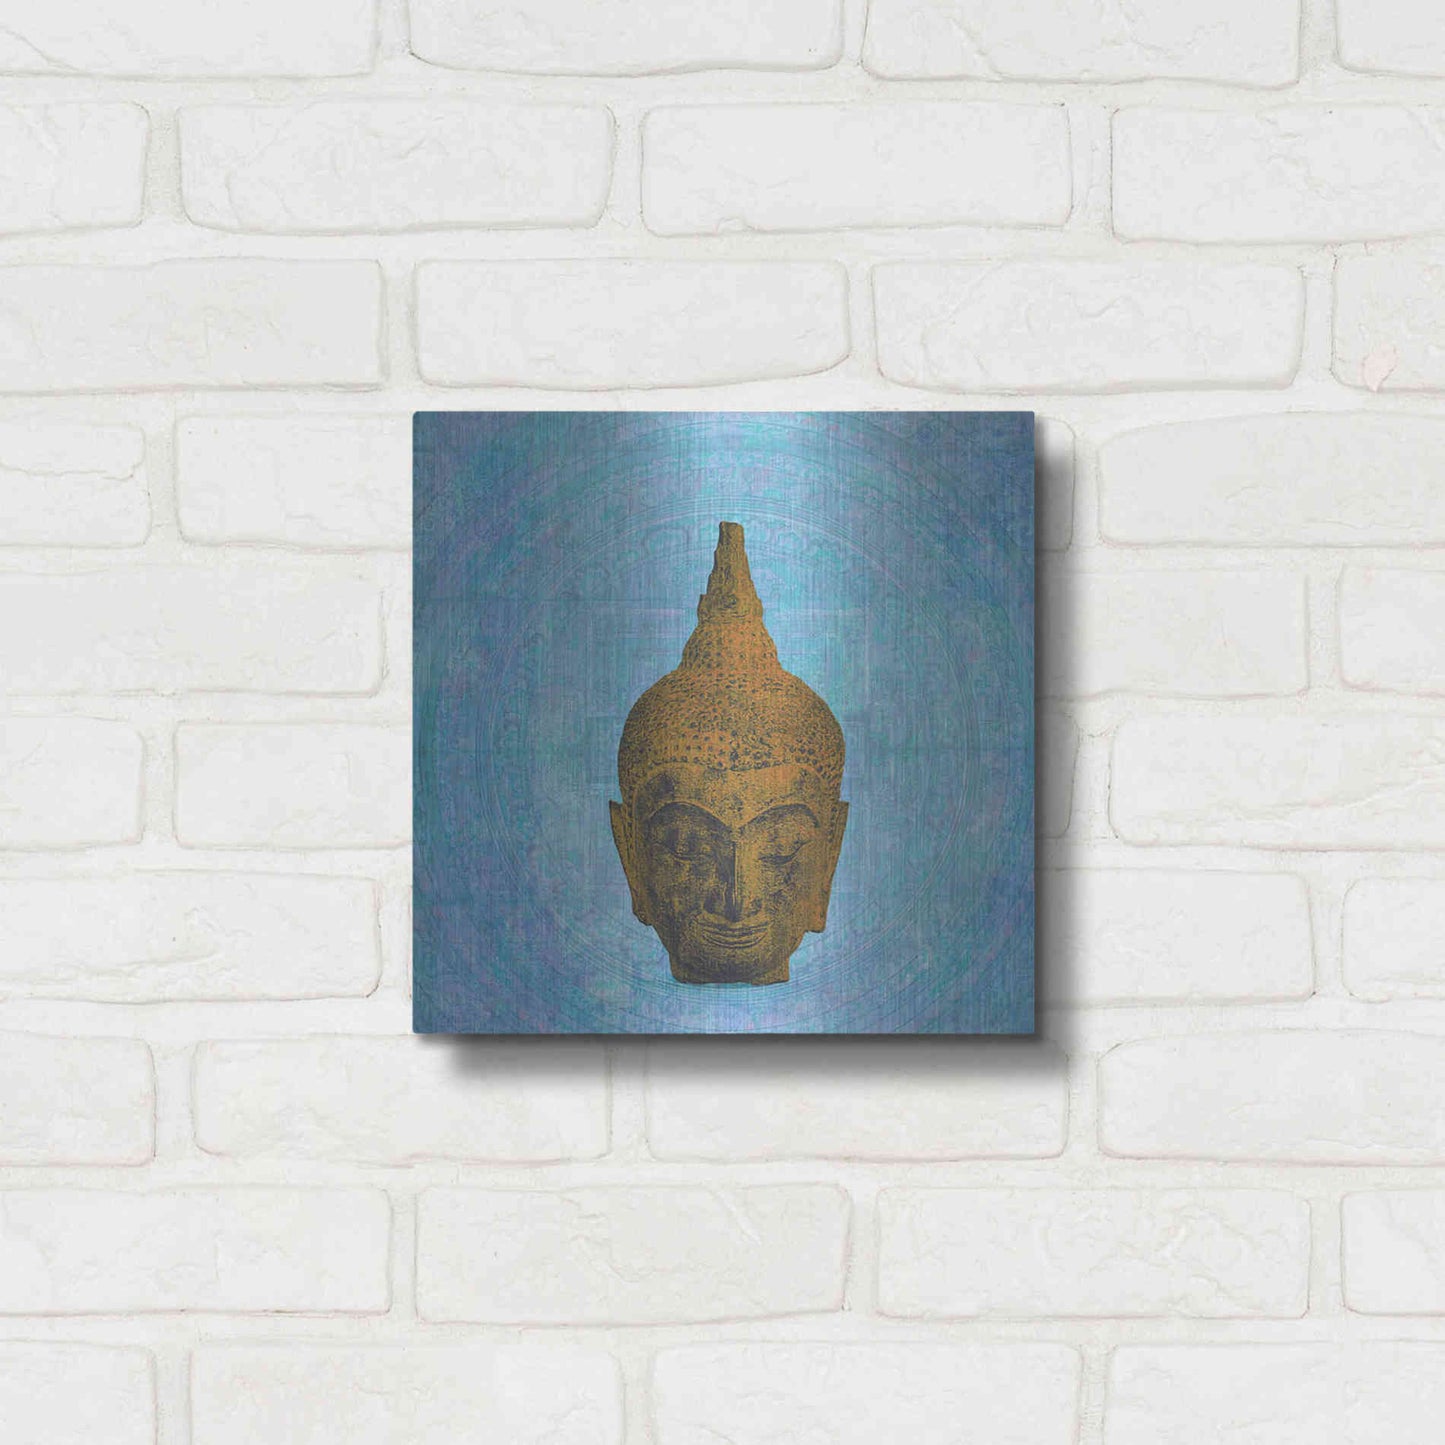 Luxe Metal Art 'Buddha on Blue' by Elena Ray, Metal Wall Art,12x12